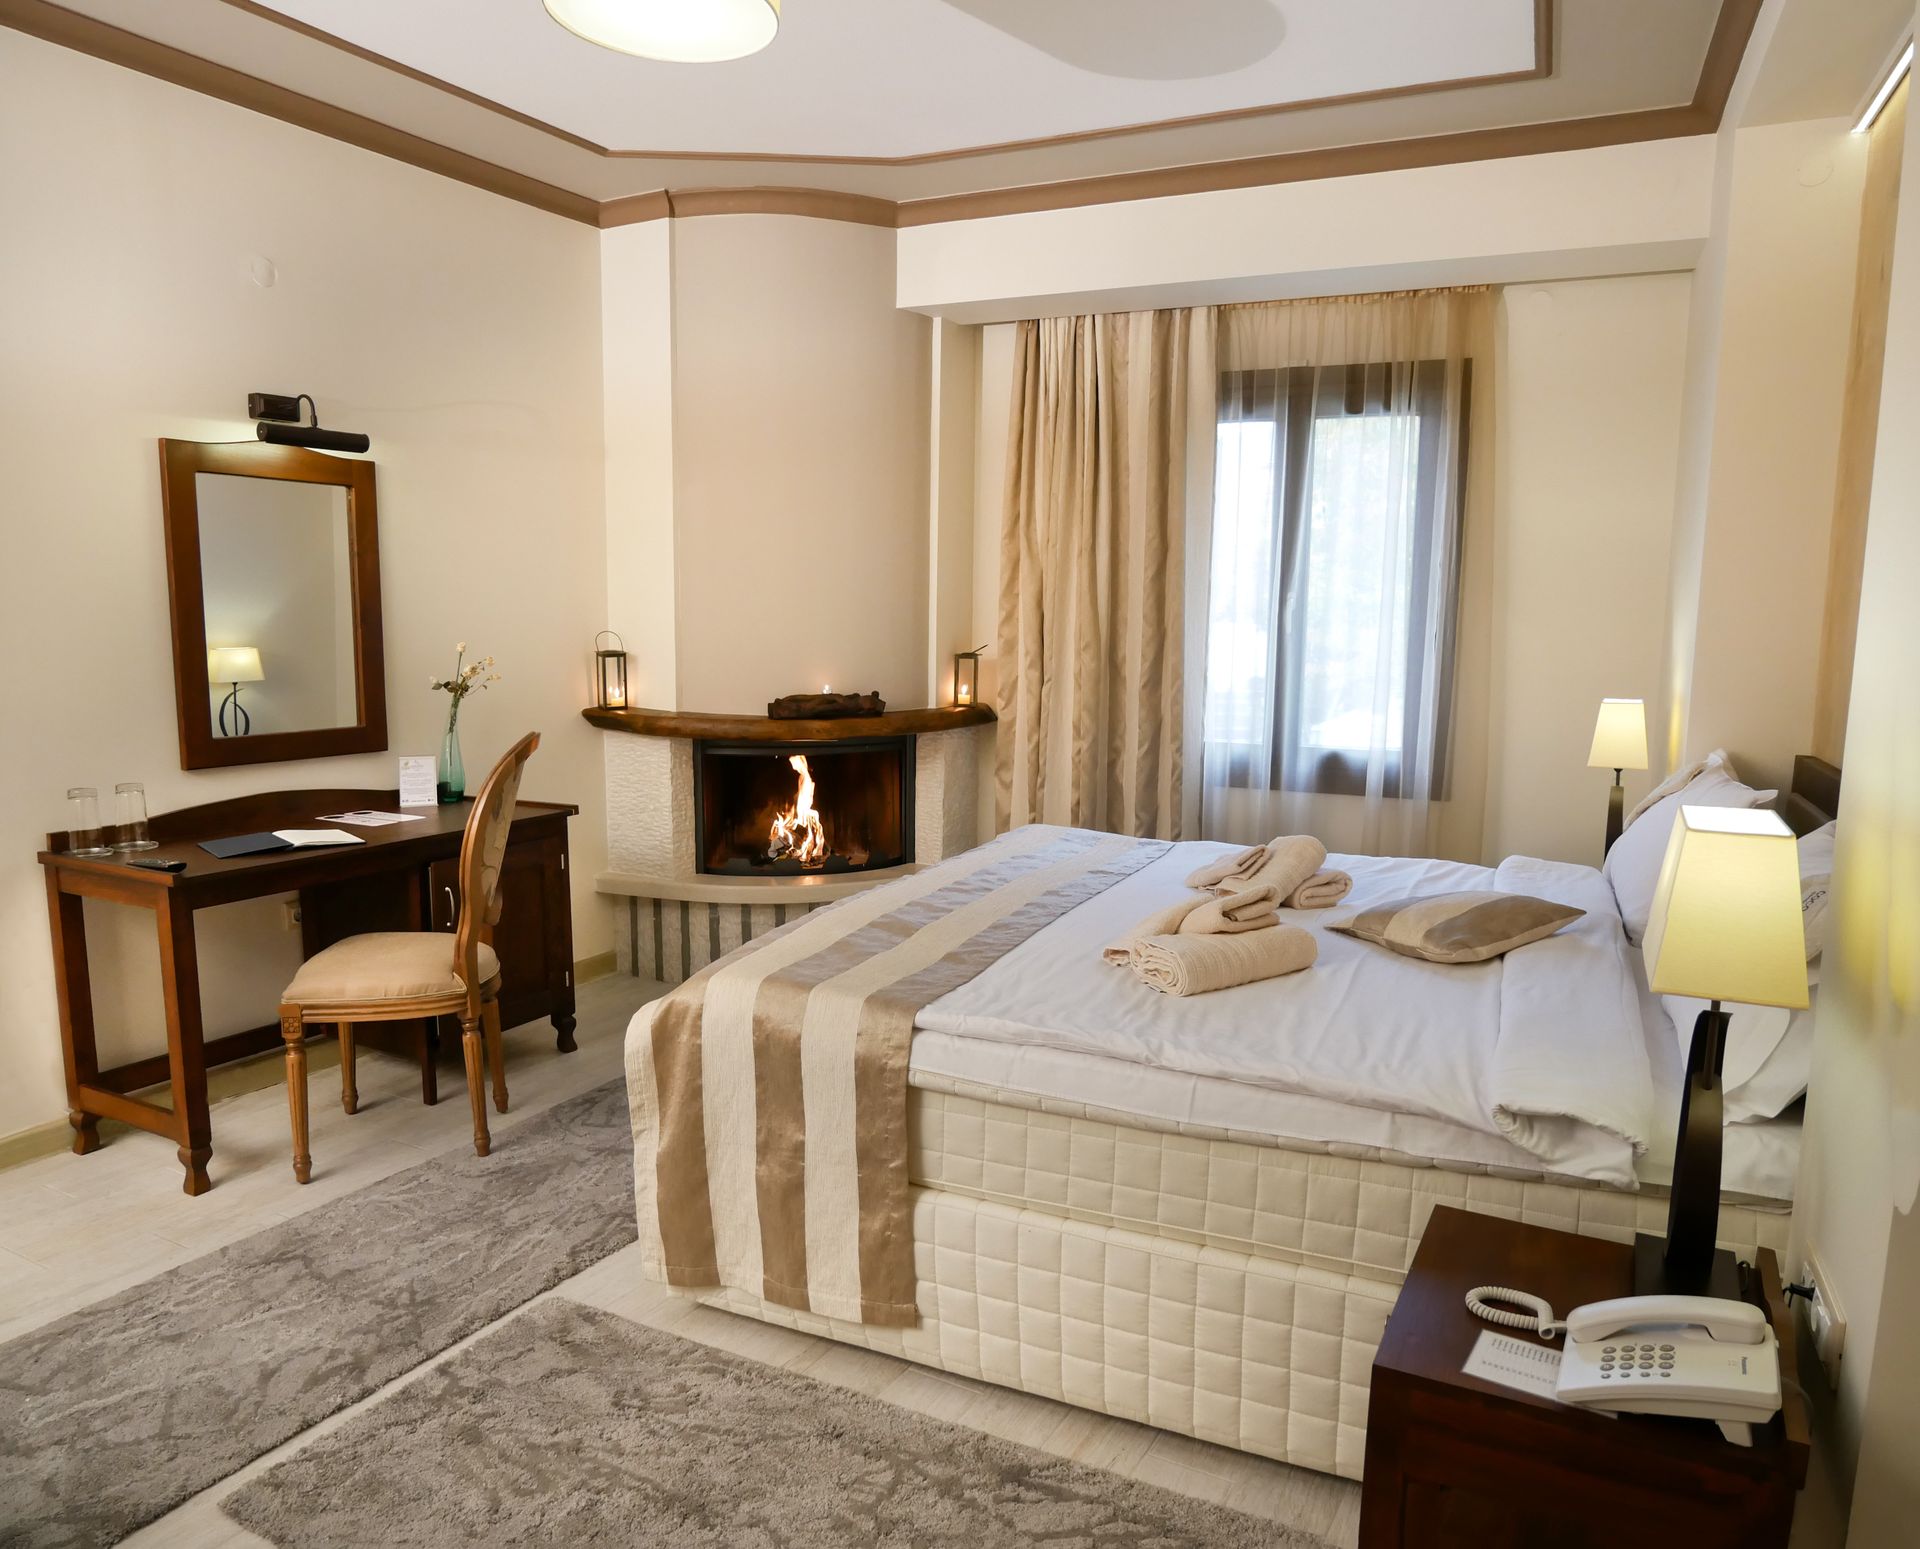 Rodovoli Hotel Konitsa - Κόνιτσα ✦ 3 Ημέρες (2 Διανυκτερεύσεις)